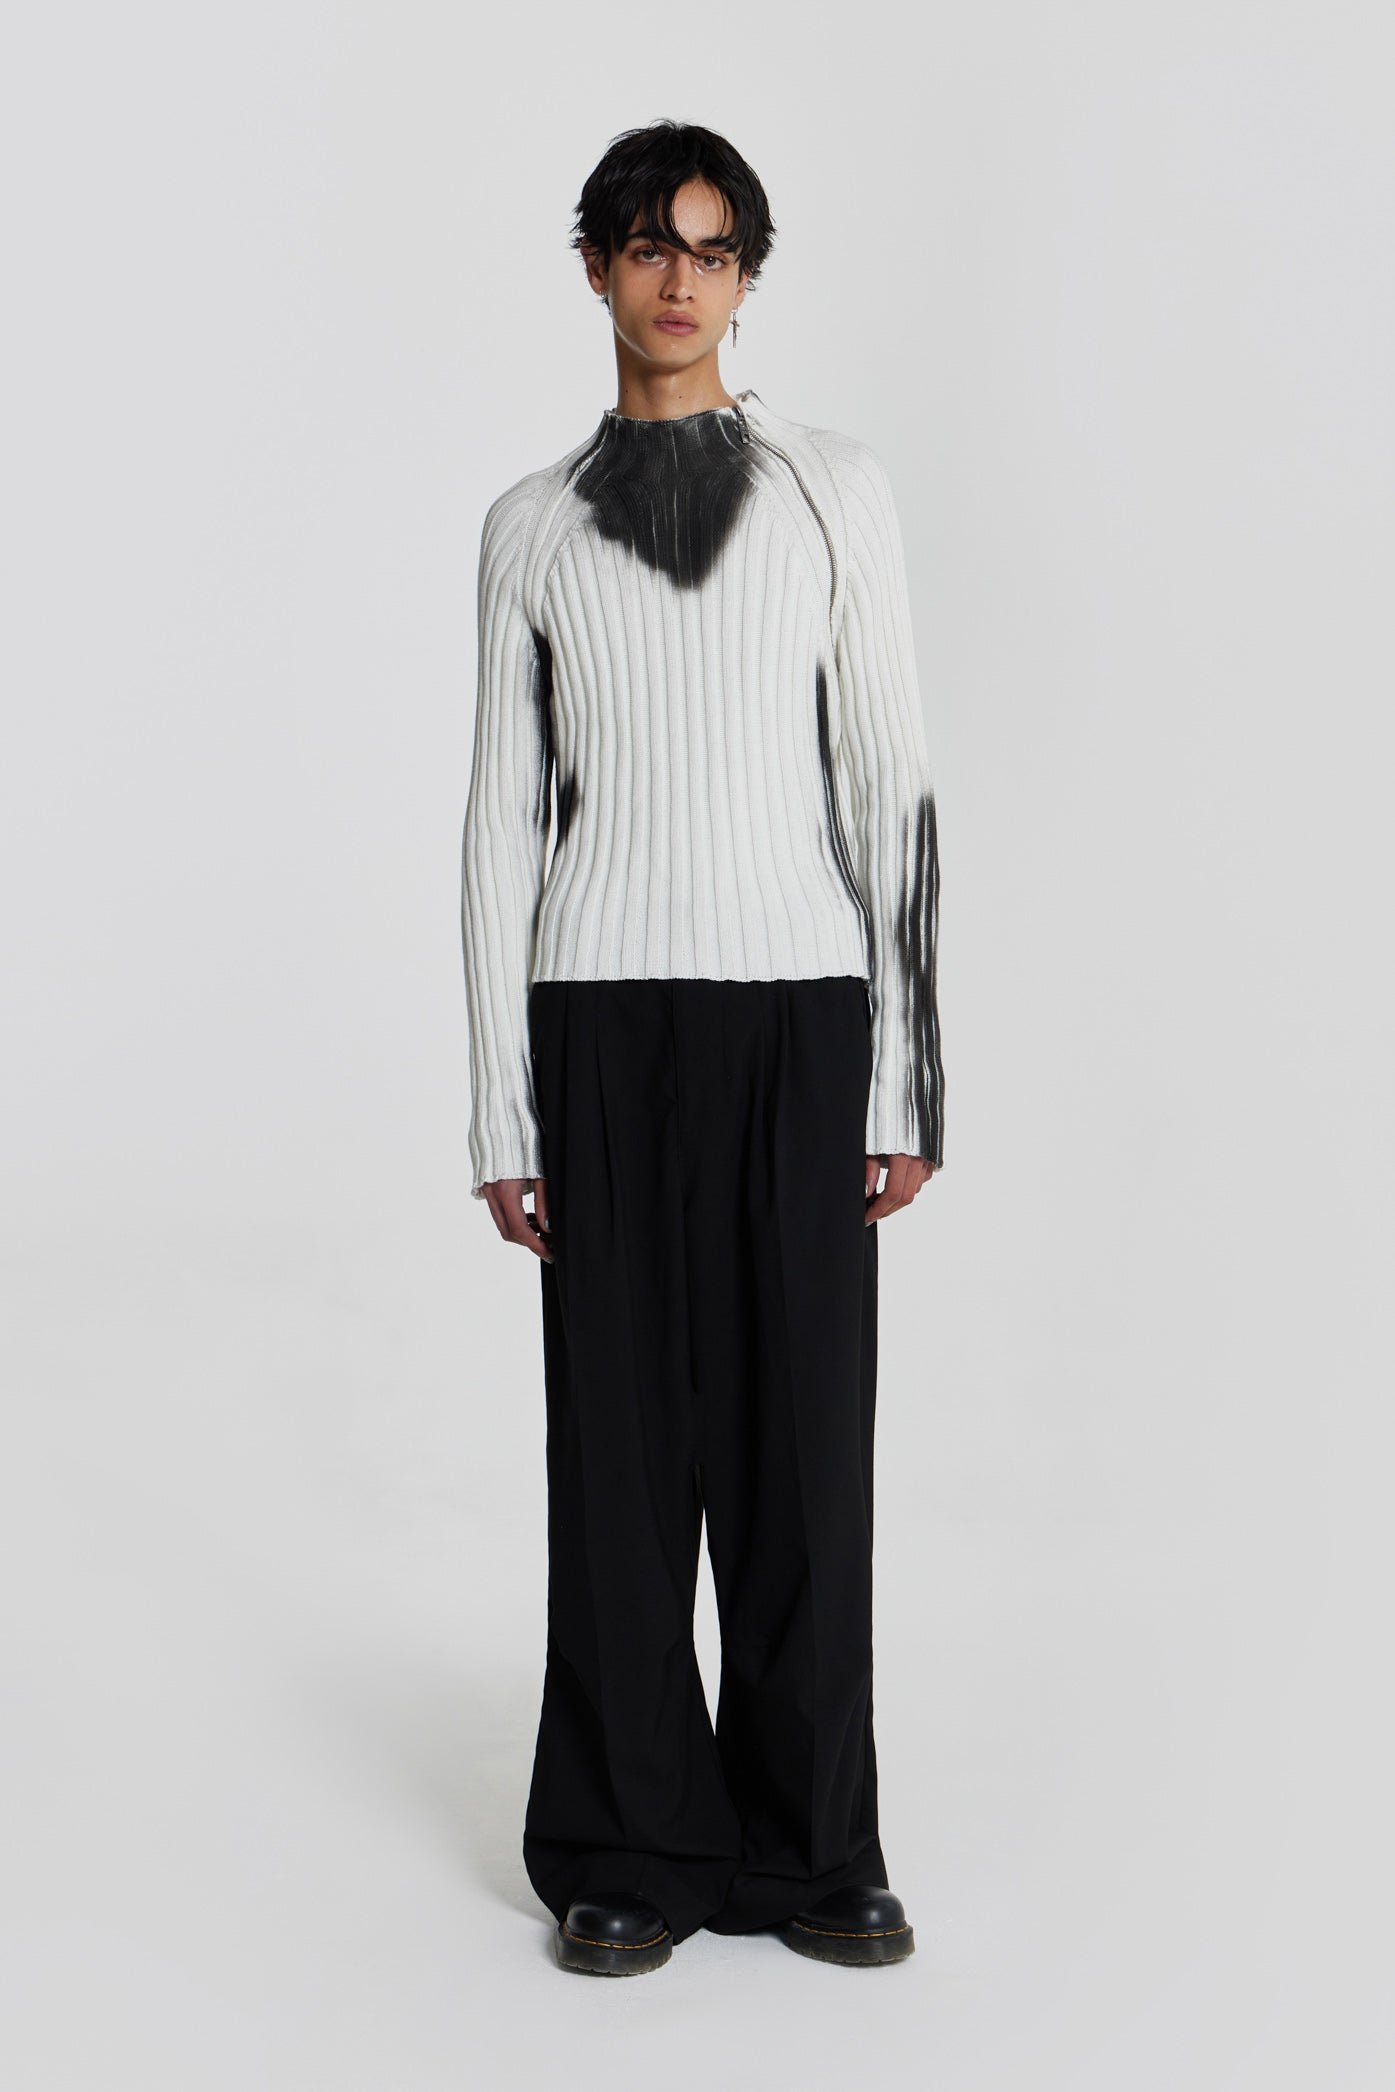 White Asymmetric Luster Knit | Jaded London